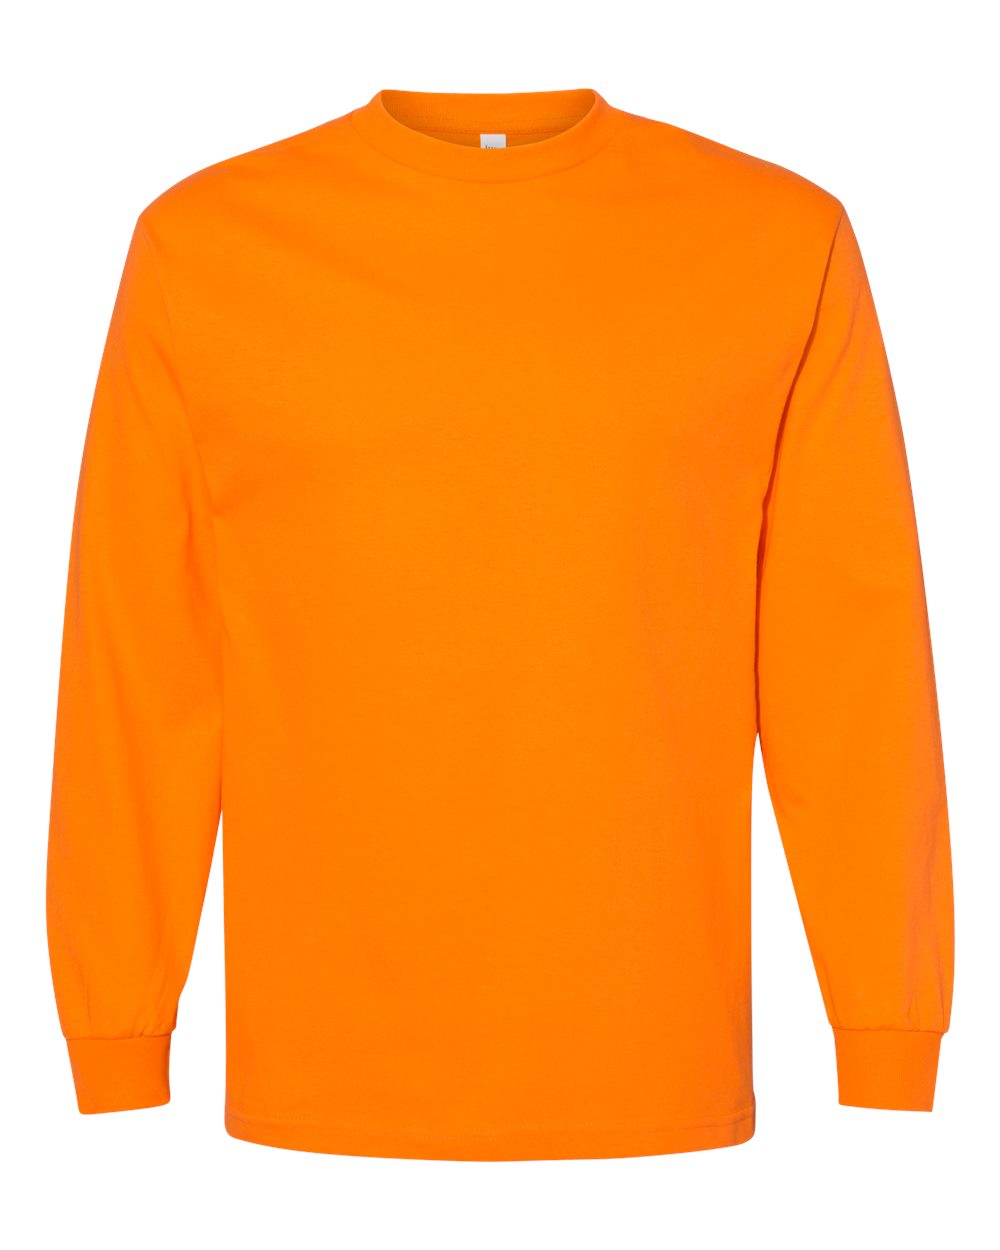 American Apparel Unisex Heavyweight Cotton Long Sleeve Tee 1304 #color_Orange